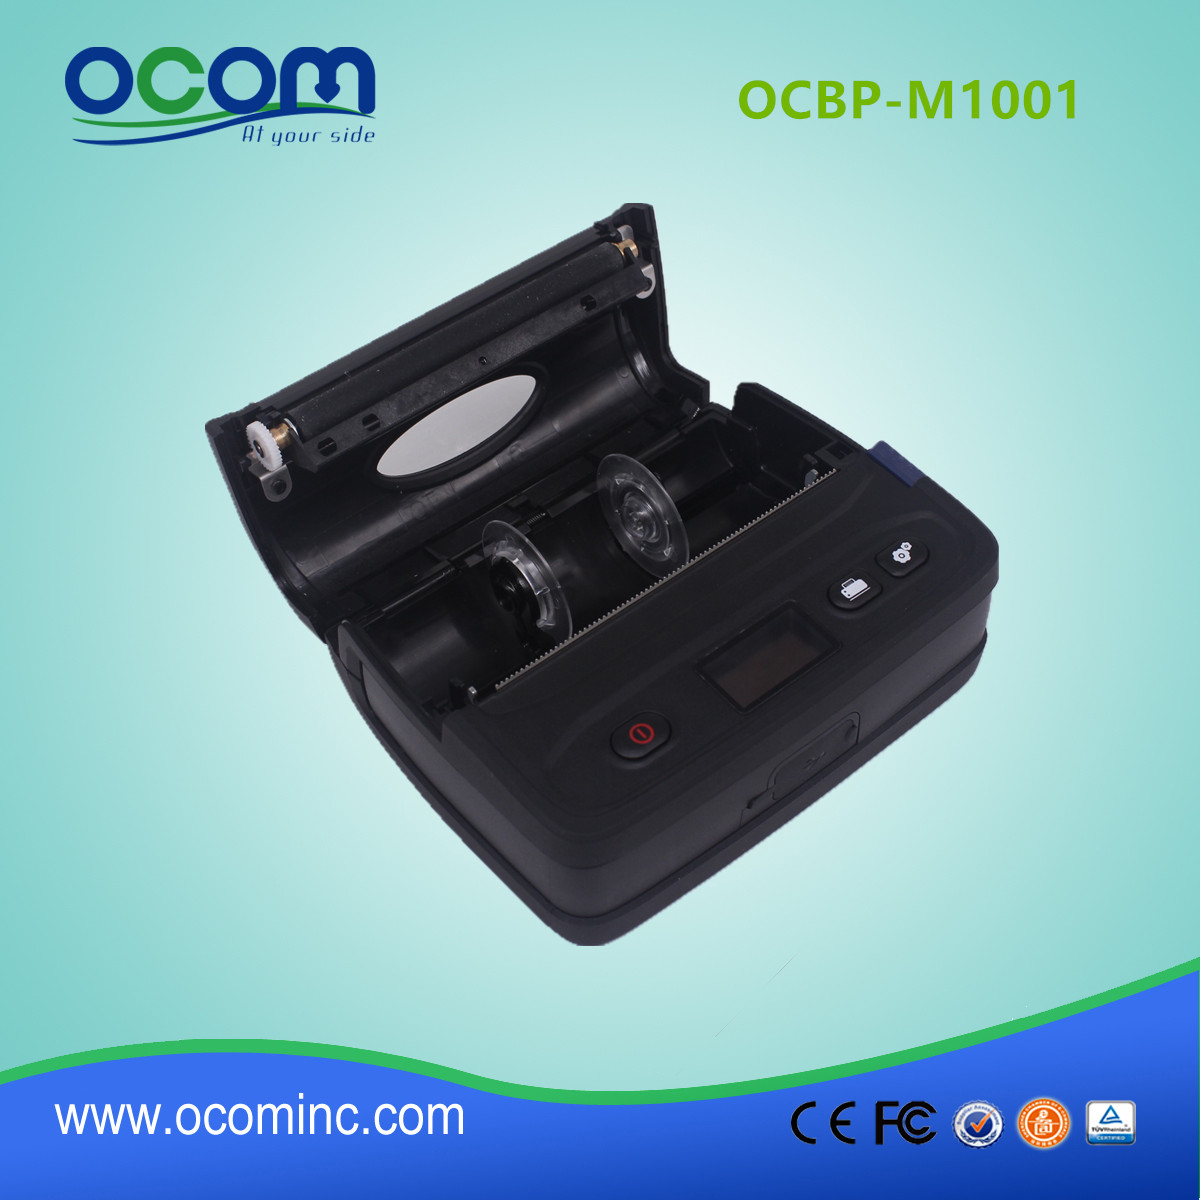 4 "Portable Bluetooth Thermische barcode label printer-OCBP-M1001